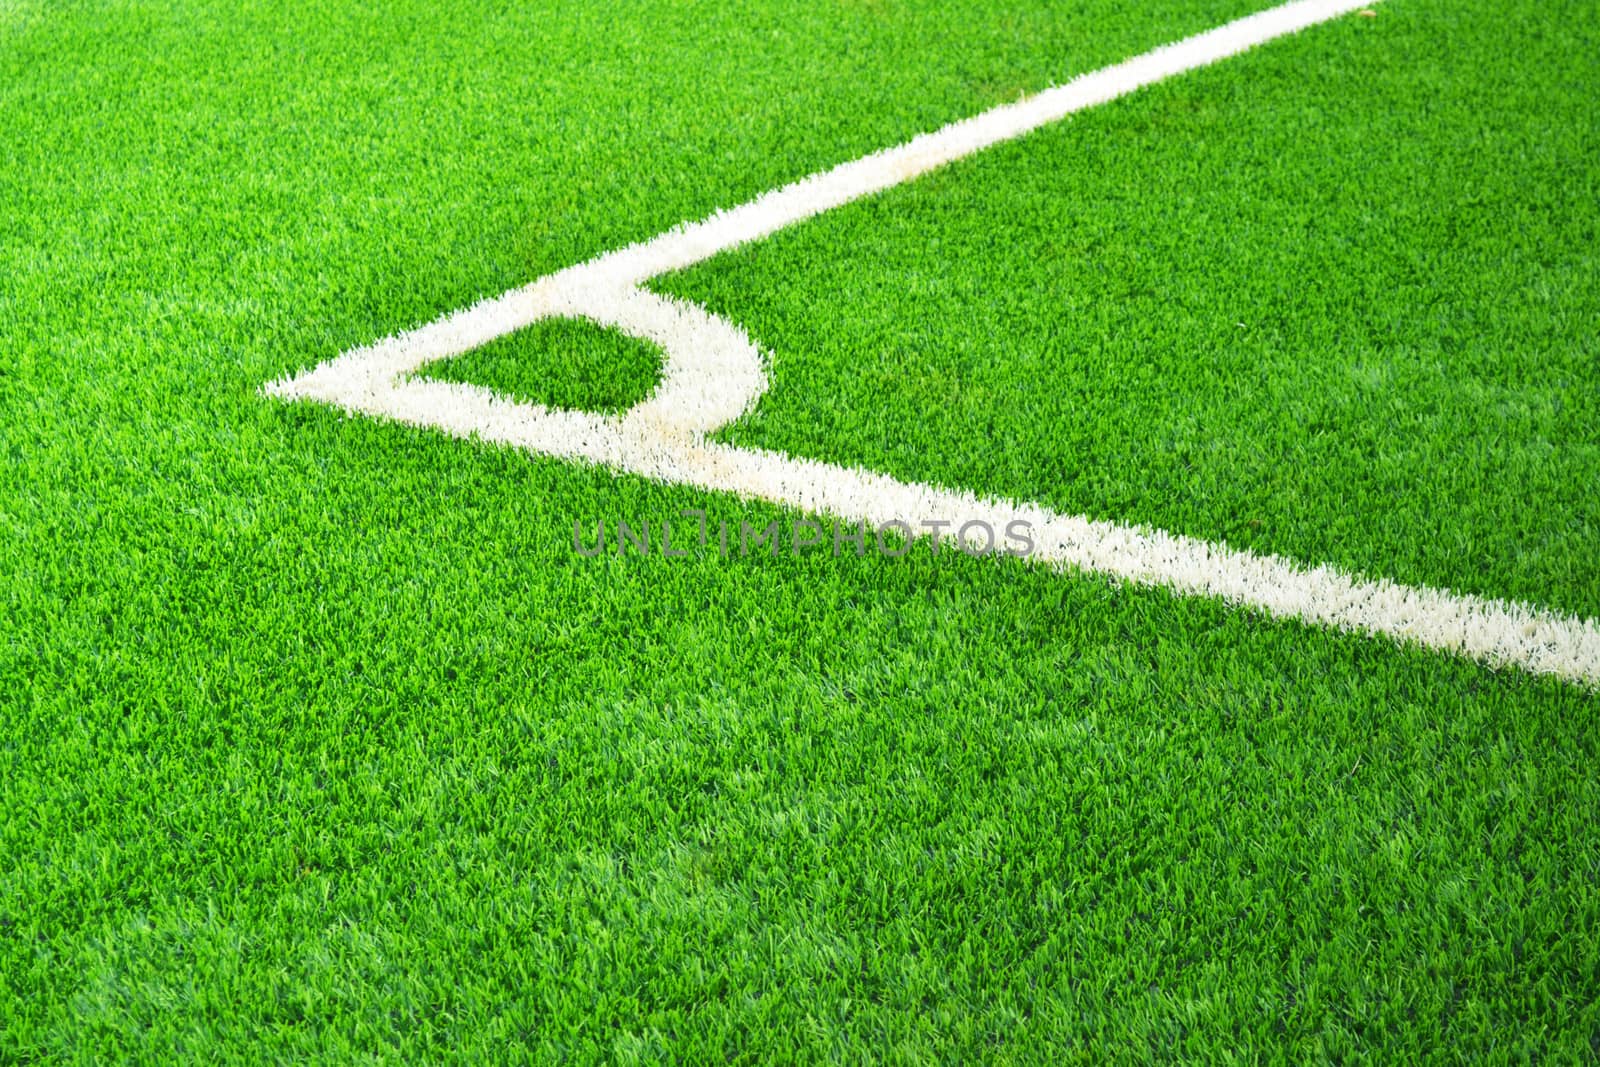 Corner of the football field in green grass.